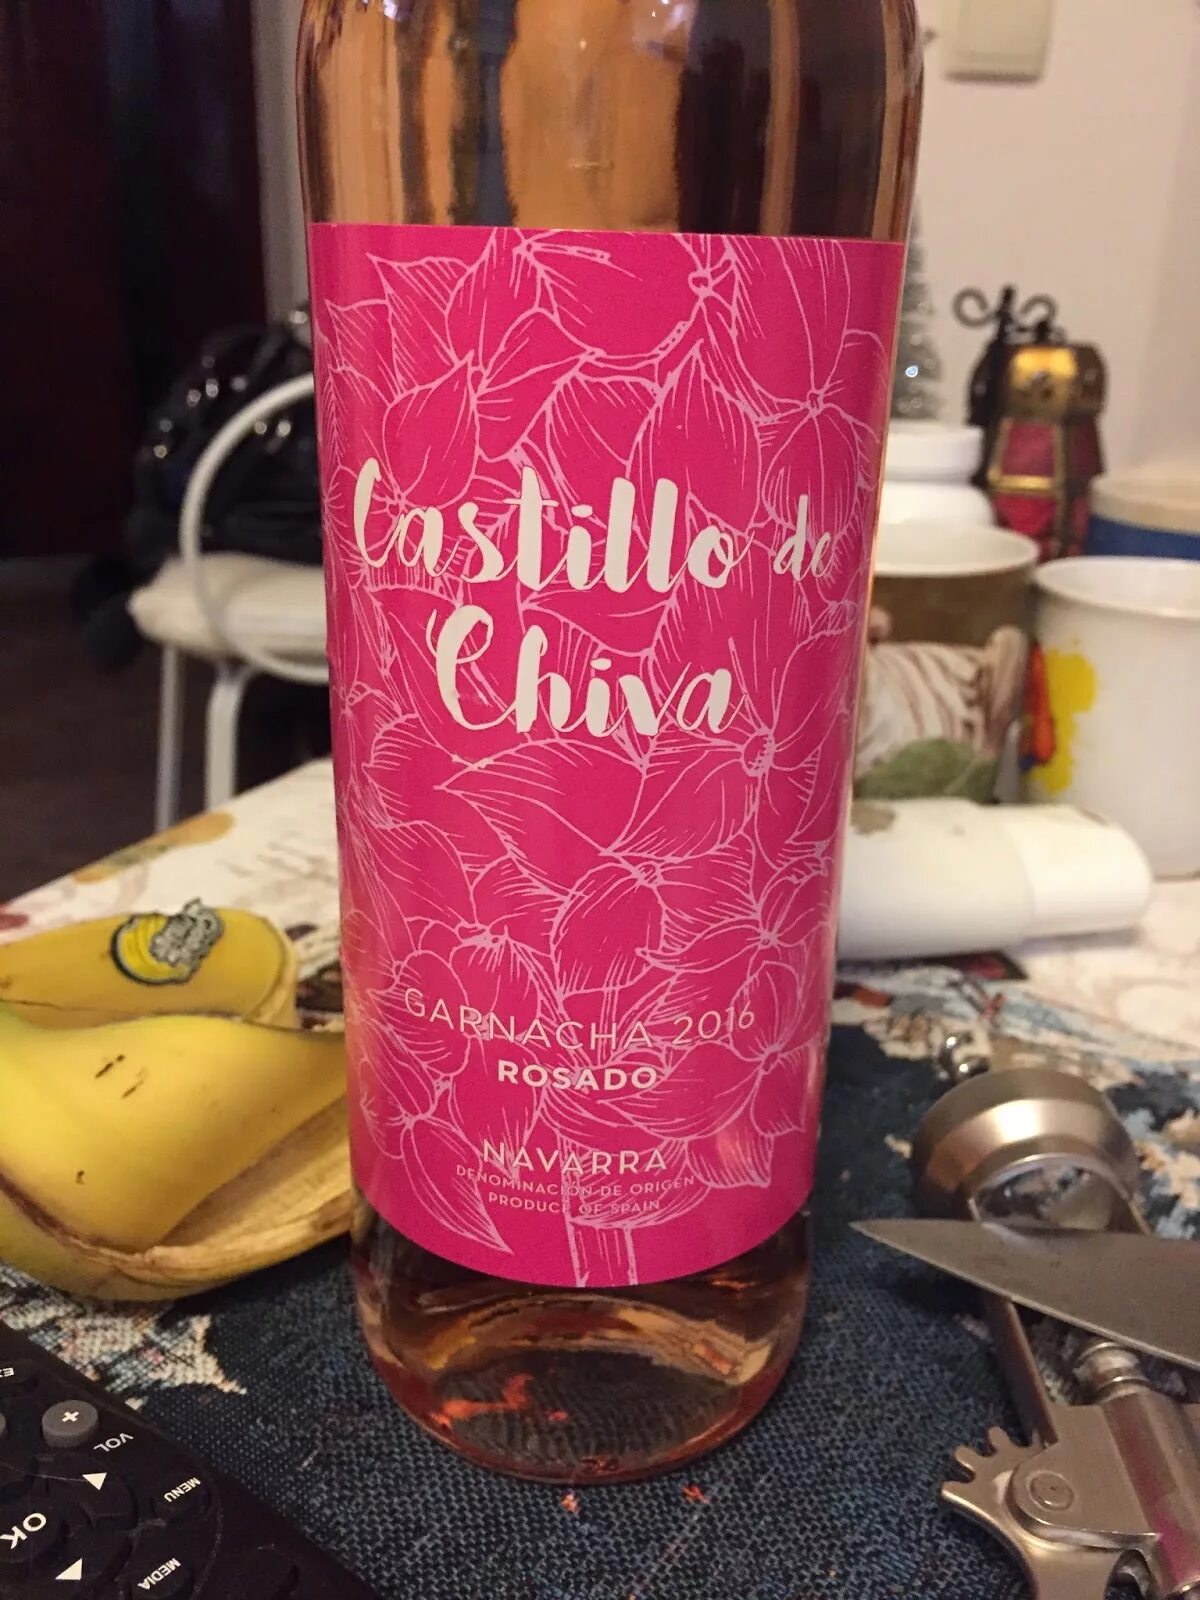 Вино Castillo de Chiva. Вино Кастильо де Чива. Испанское розовое вино. Вино розовое сухое. Розовые вина испании